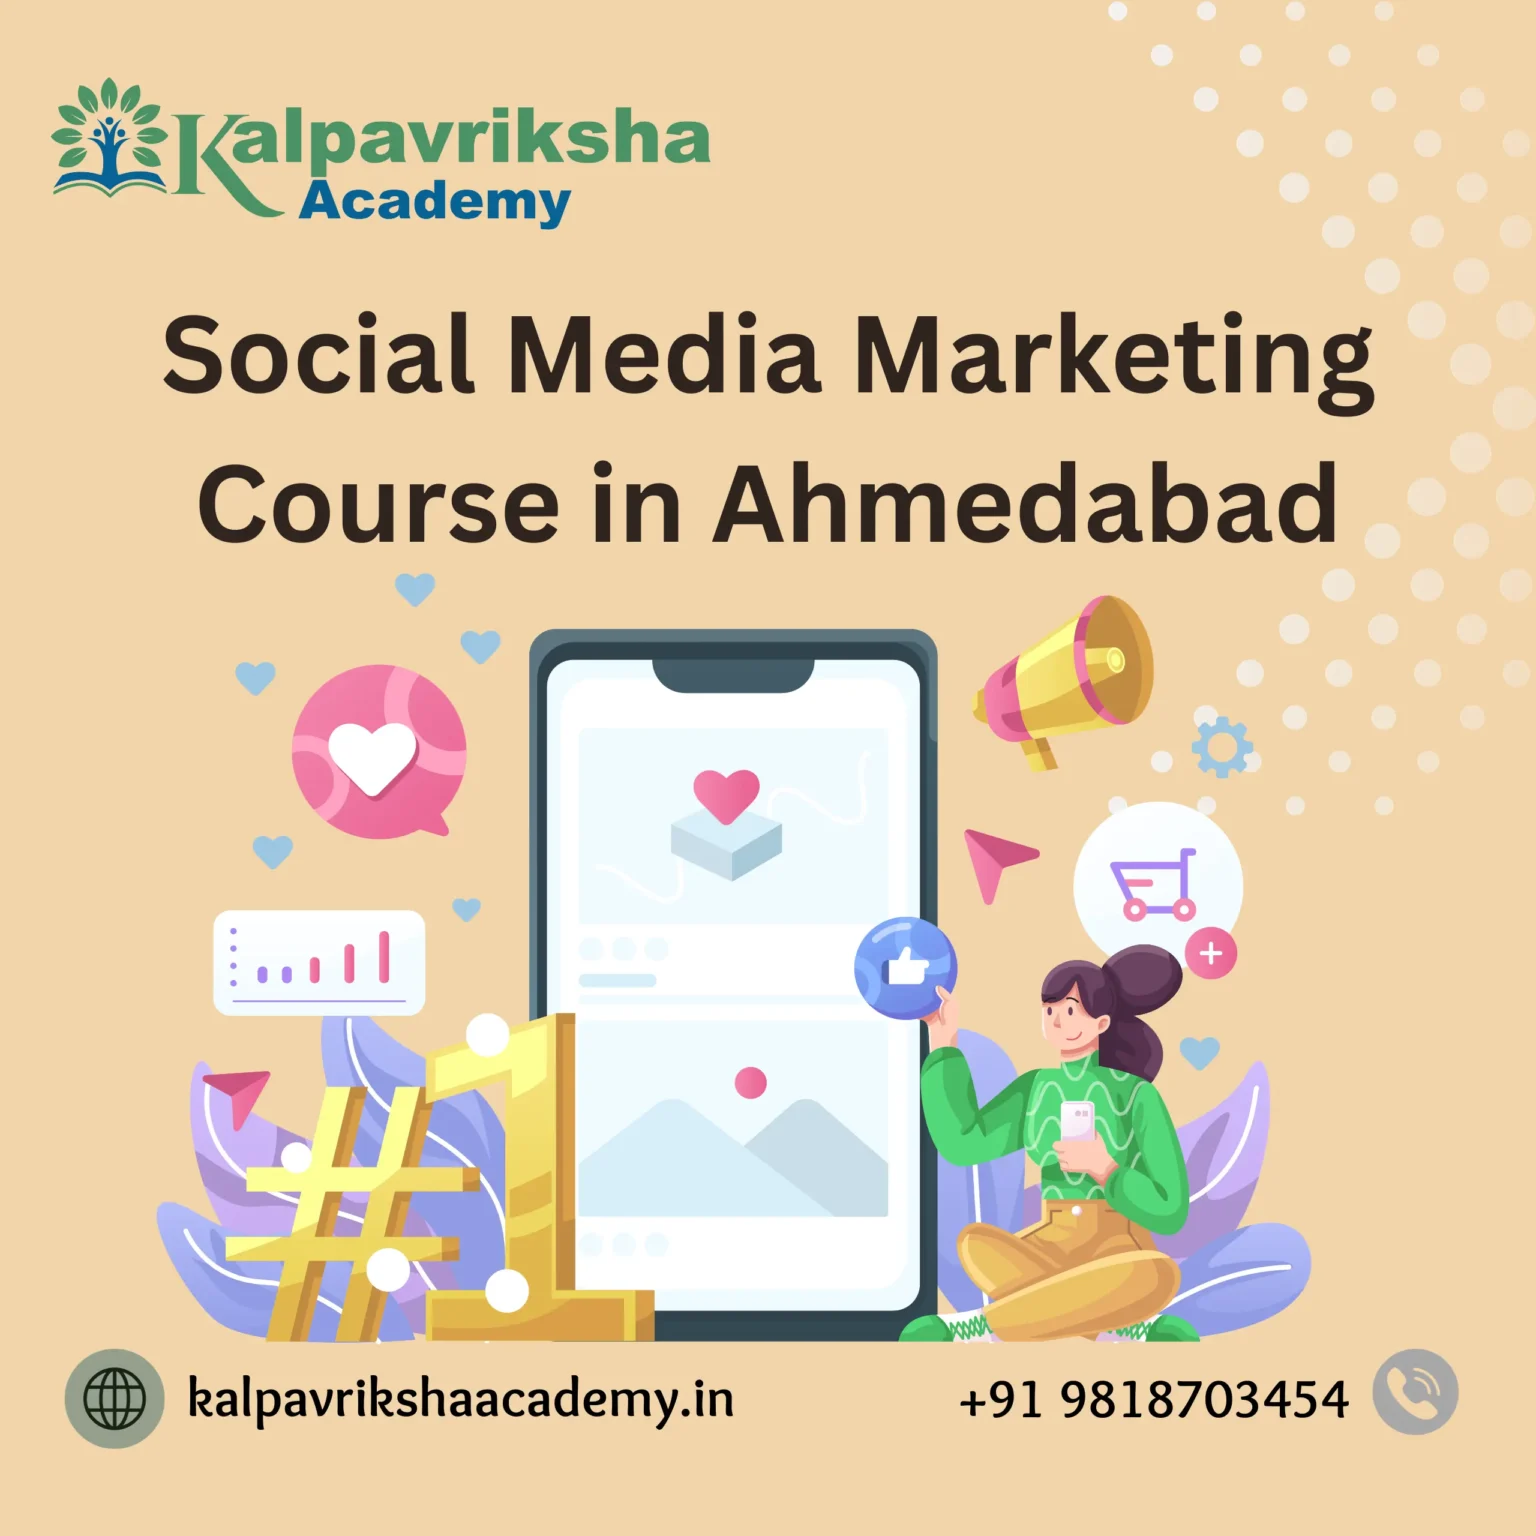 Advanced Social Media Marketing Course in Ahmedabad